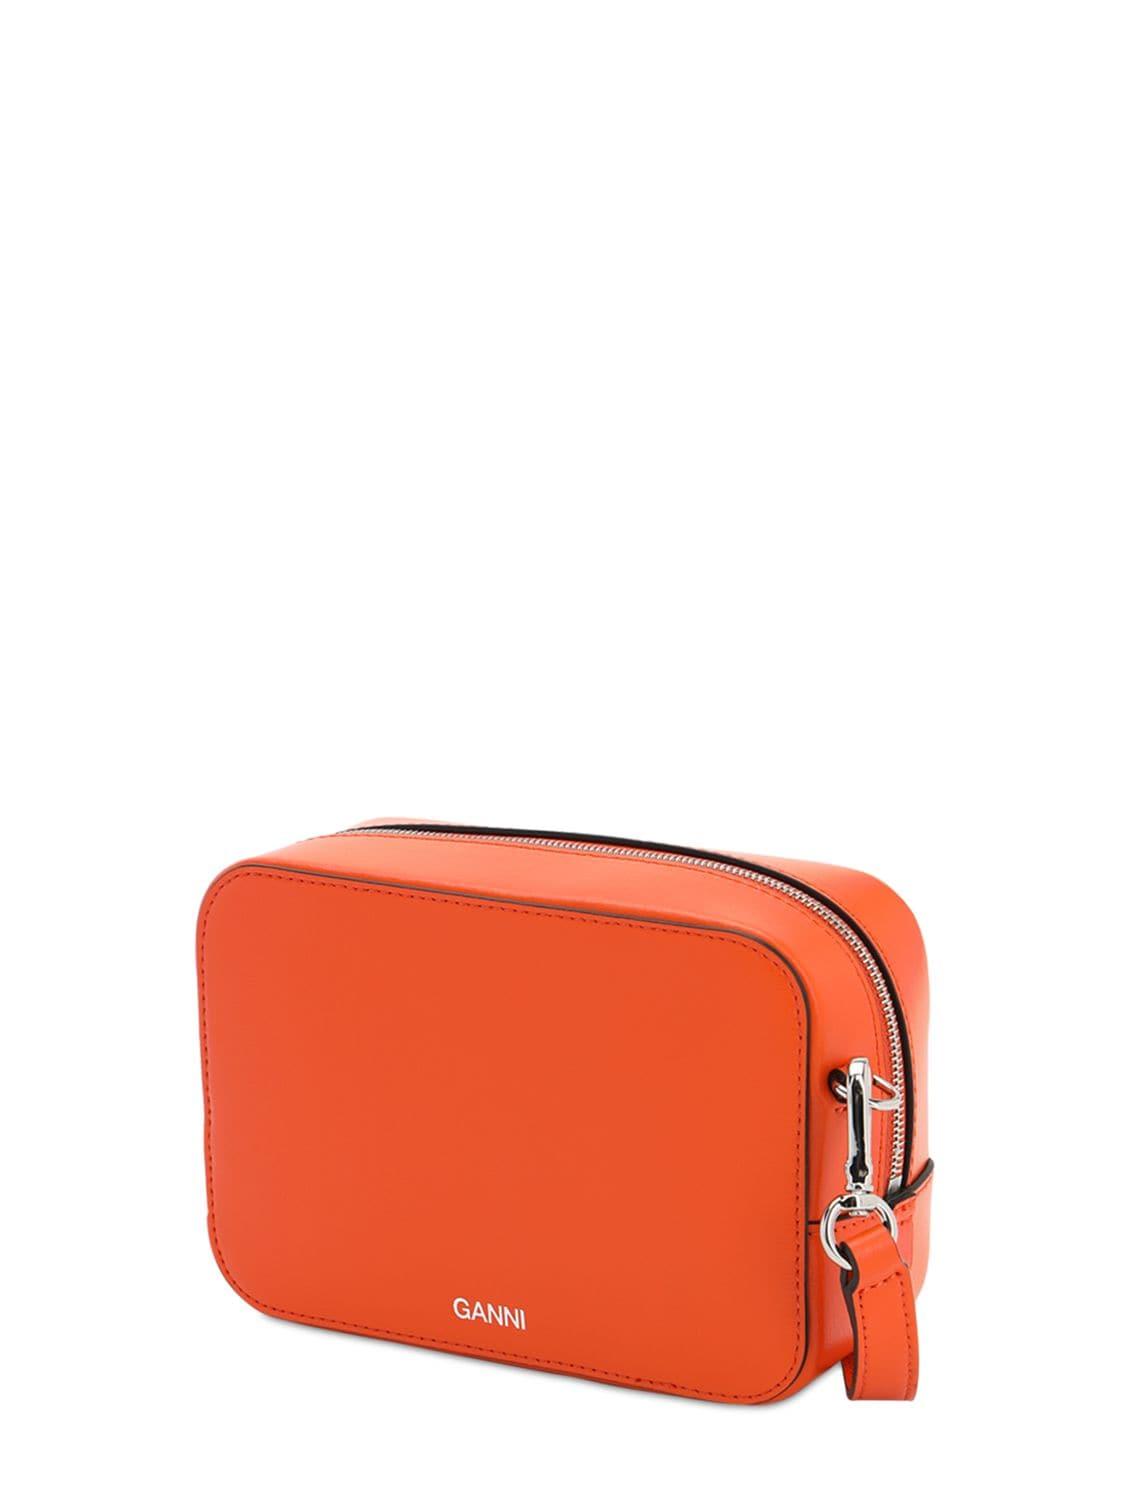 Ganni Textured Leather Bag in Orange | Lyst